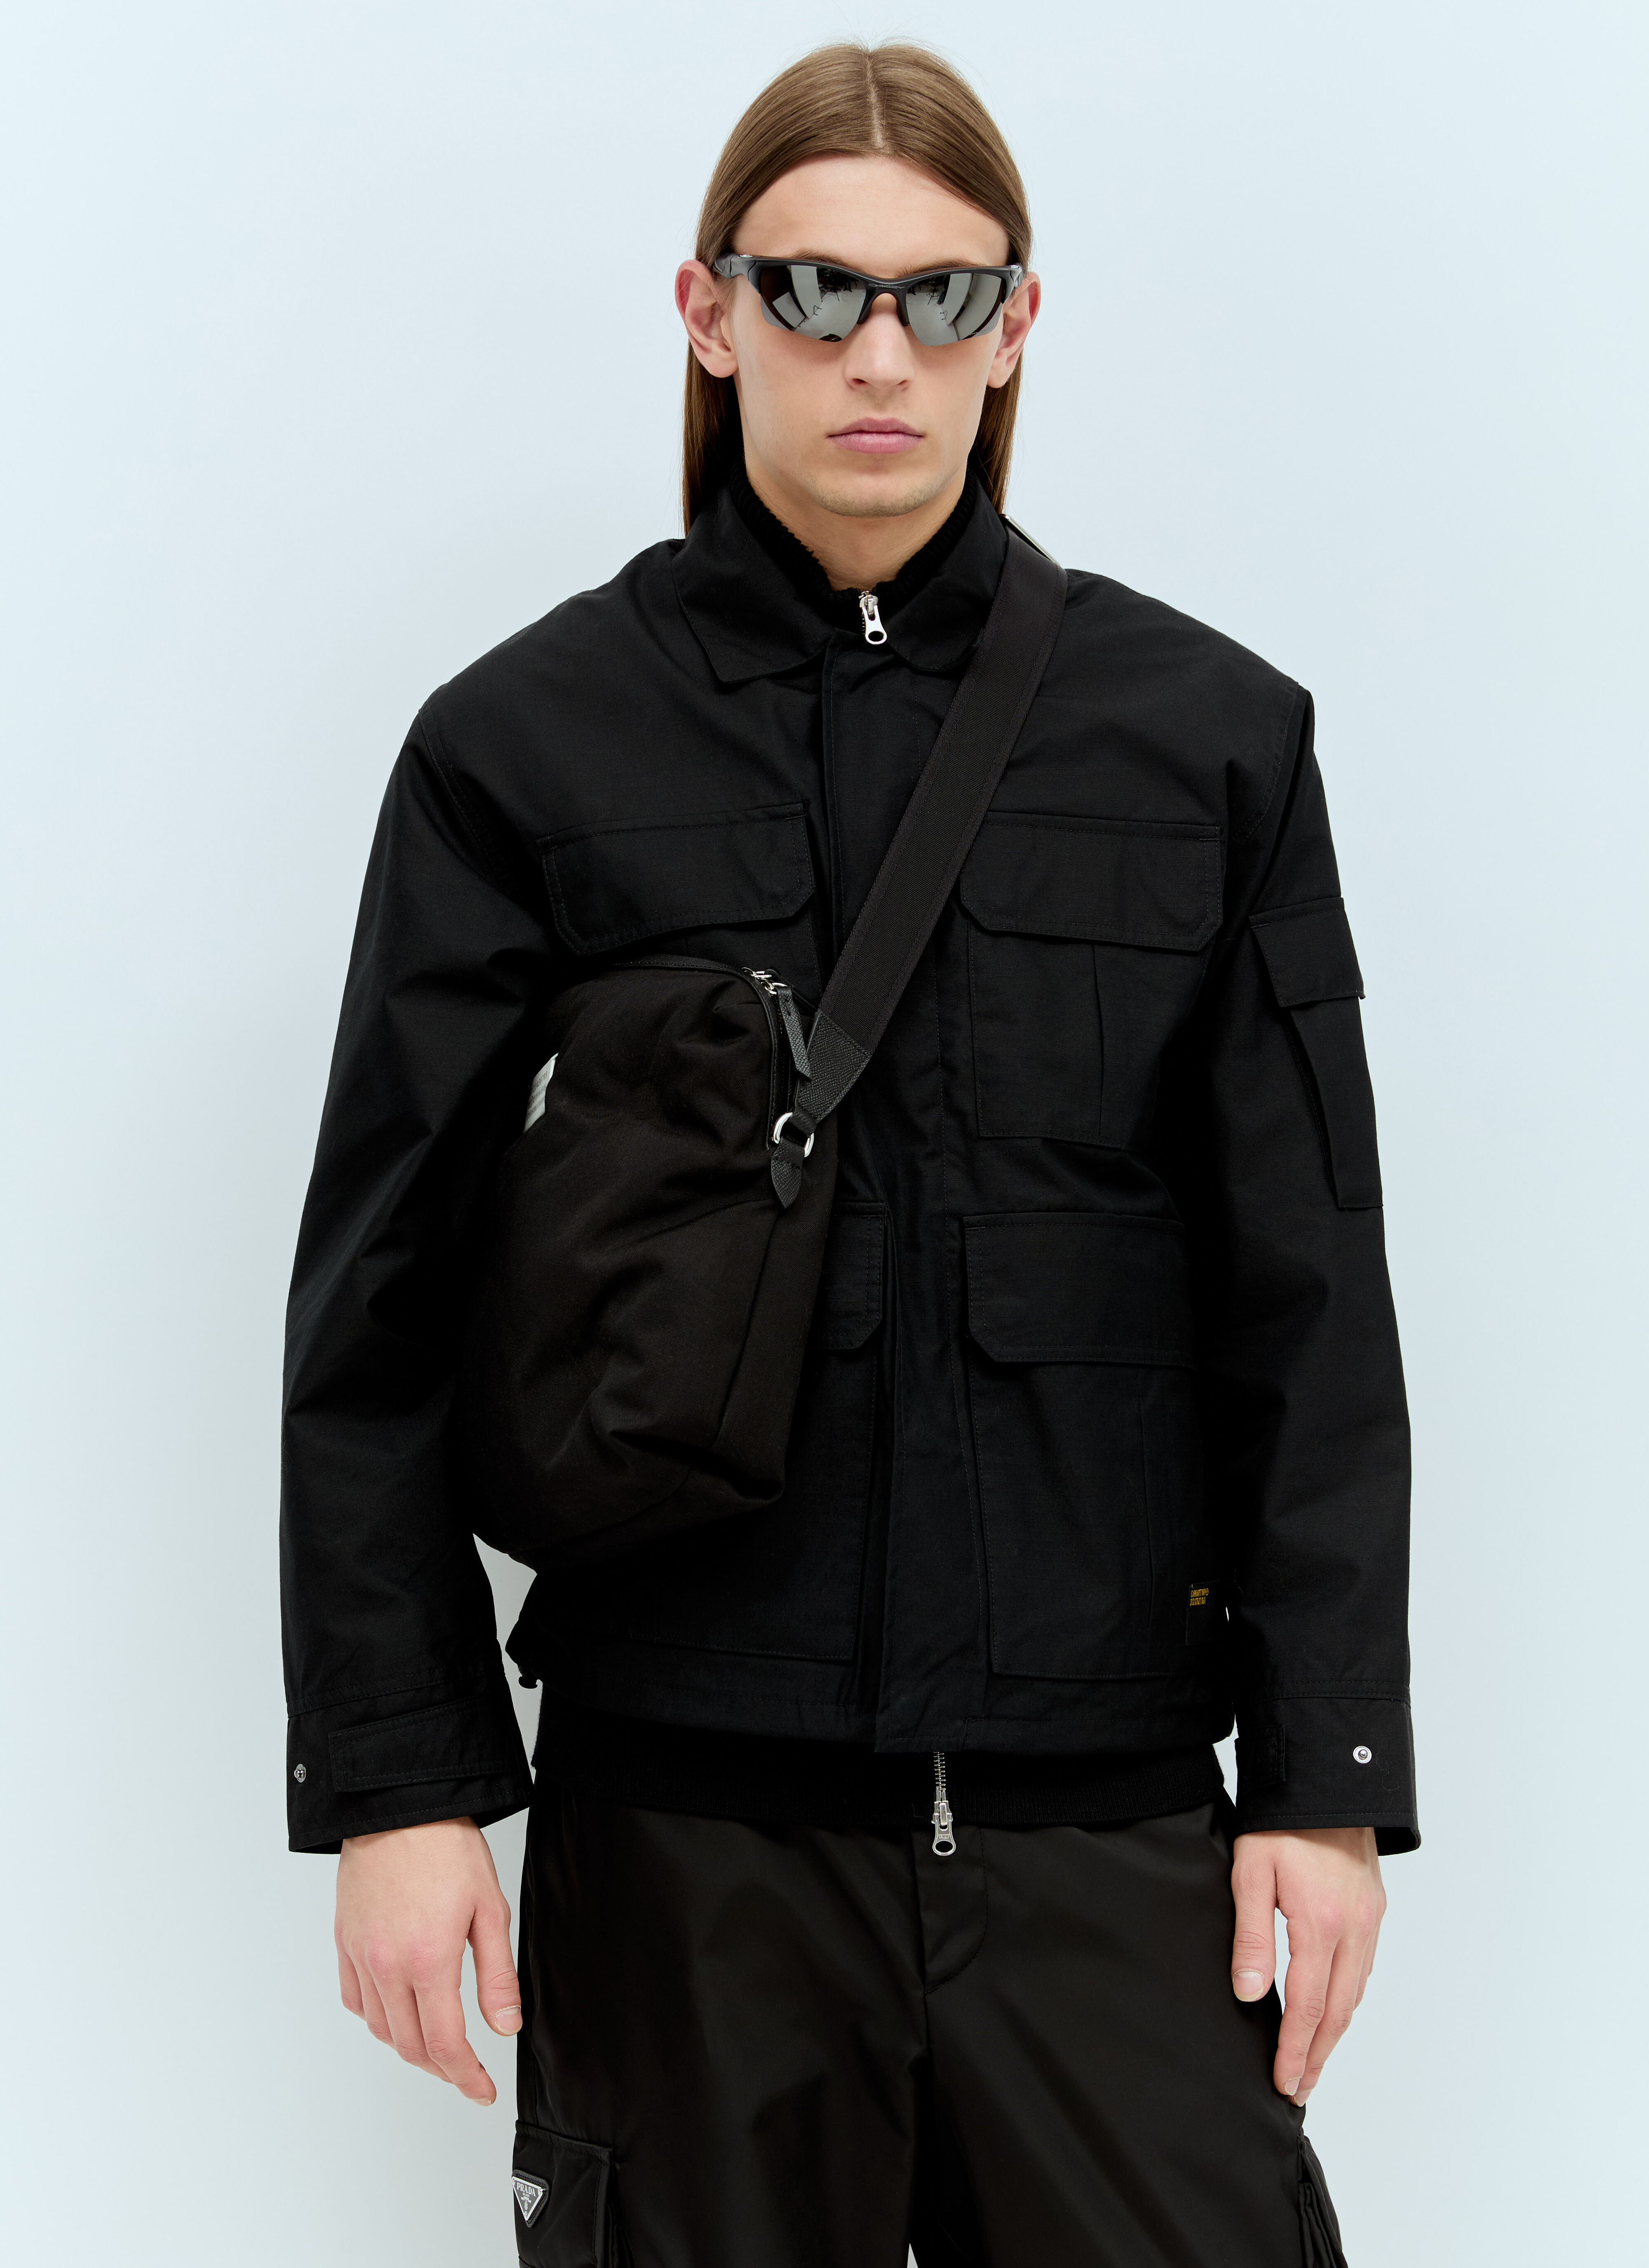 Junya Watanabe x Oakley Half Jacket 2.0 XL 太阳镜 黑色 jwo0154001